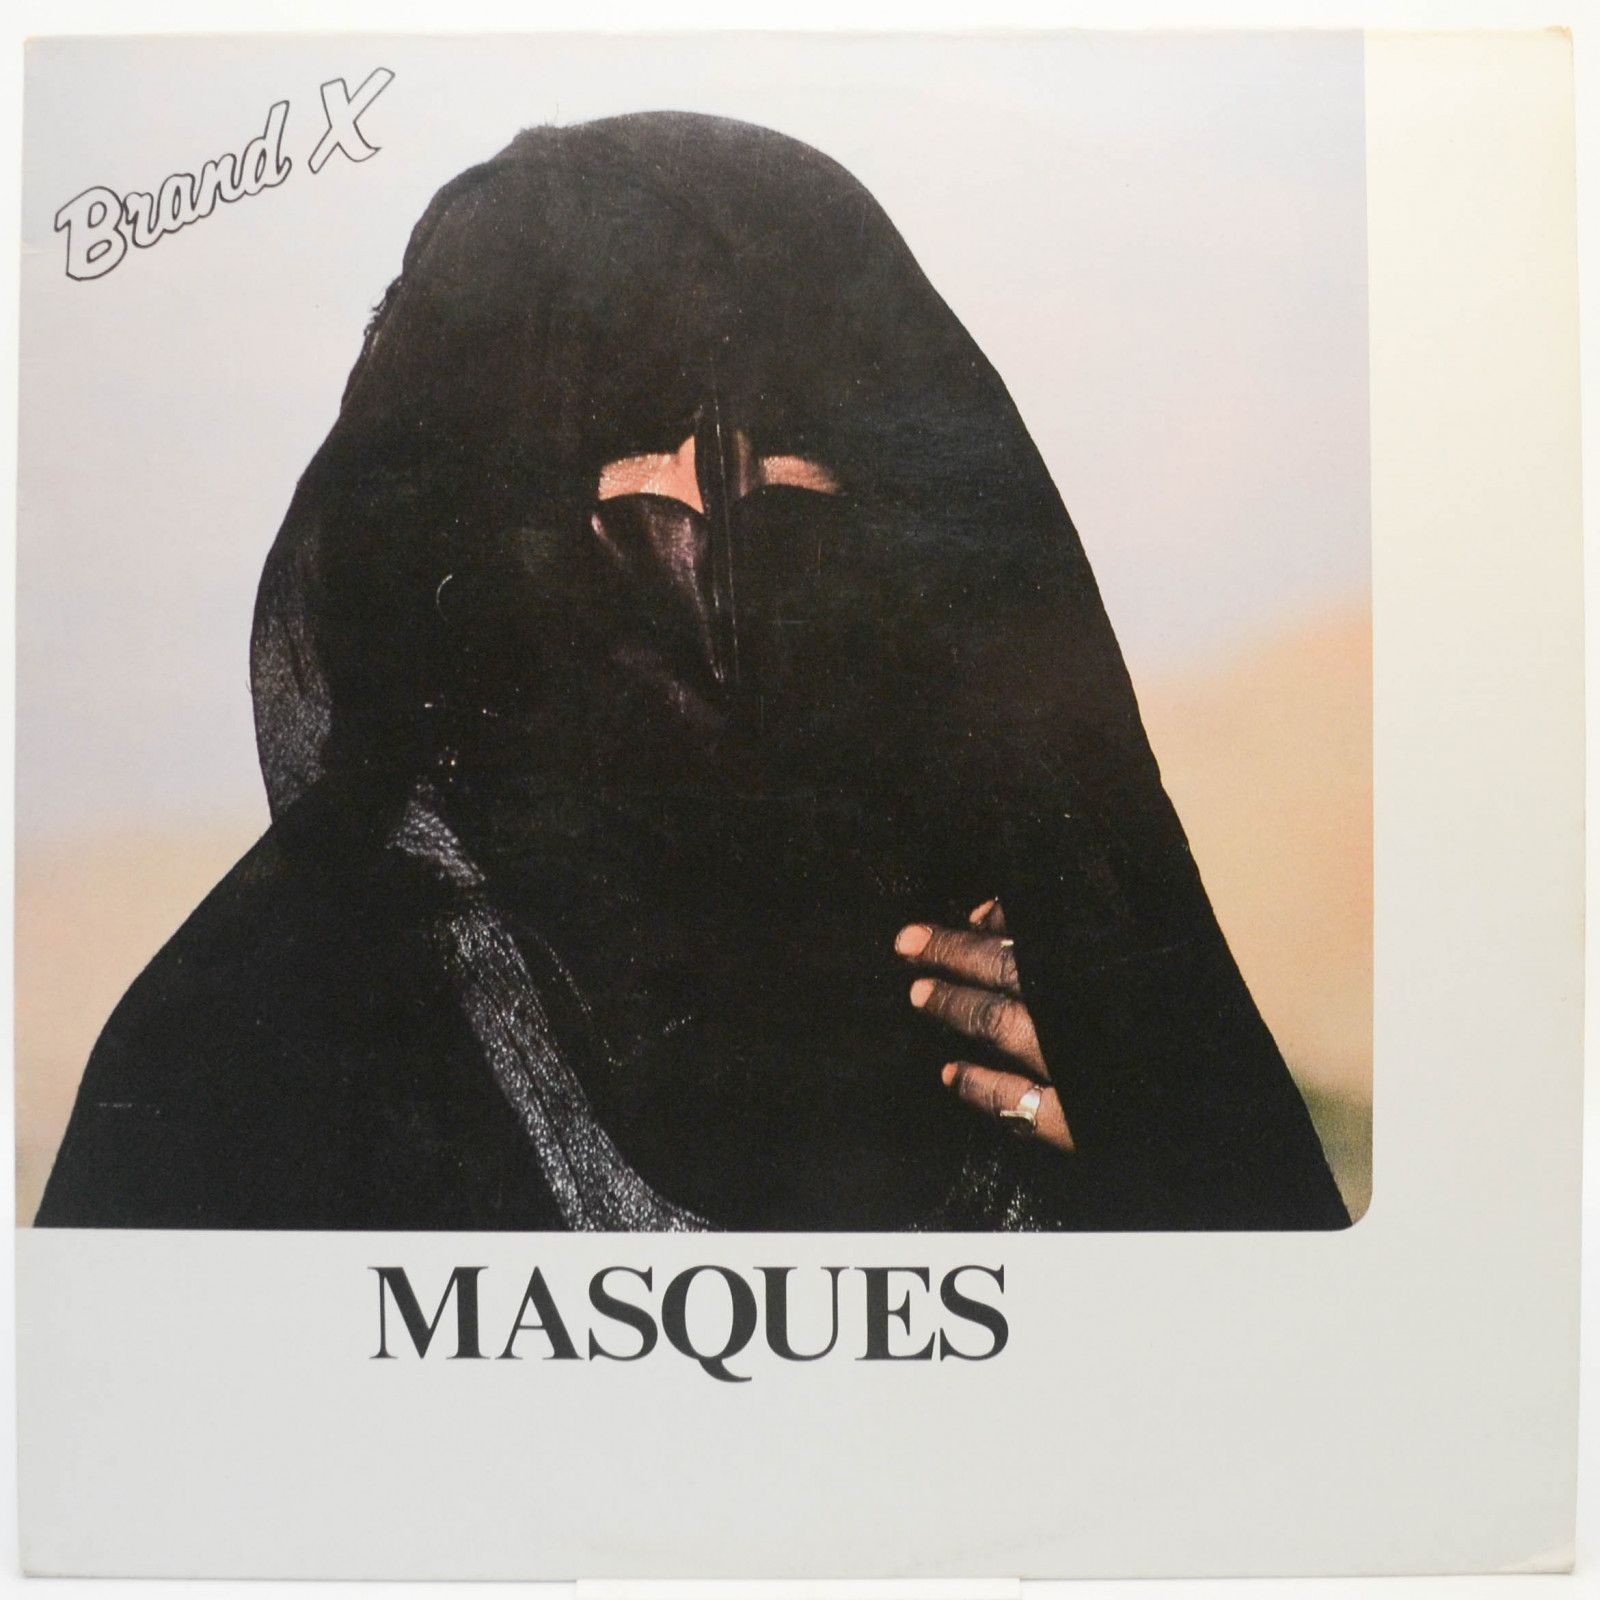 Brand X — Masques, 1978